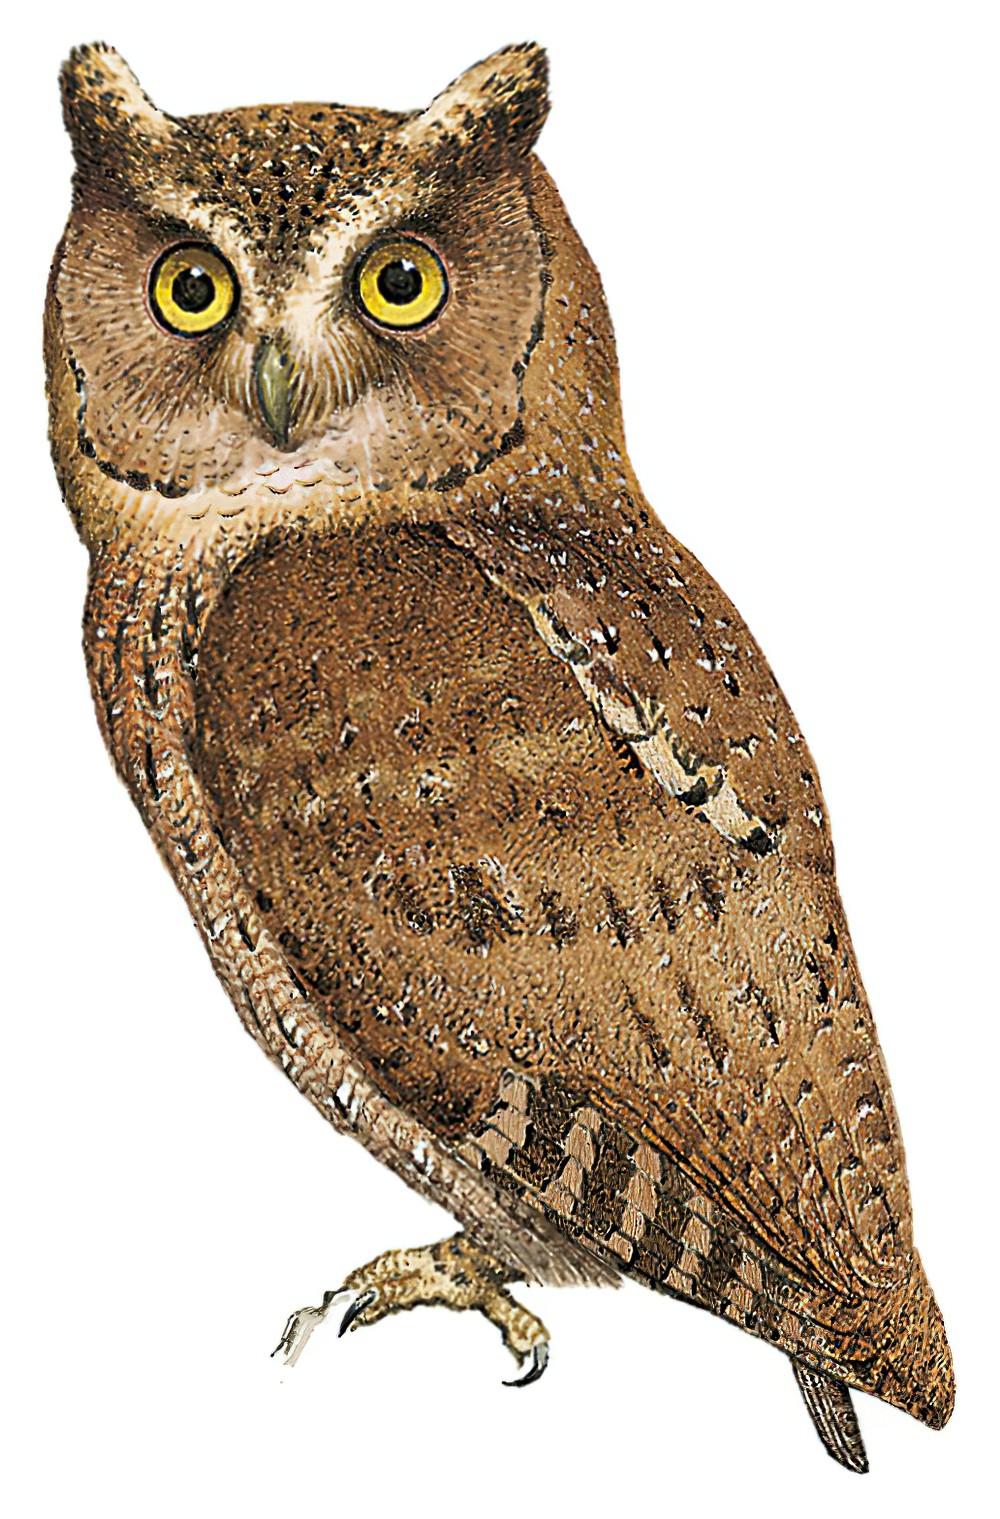 Siau Scops-Owl / Otus siaoensis